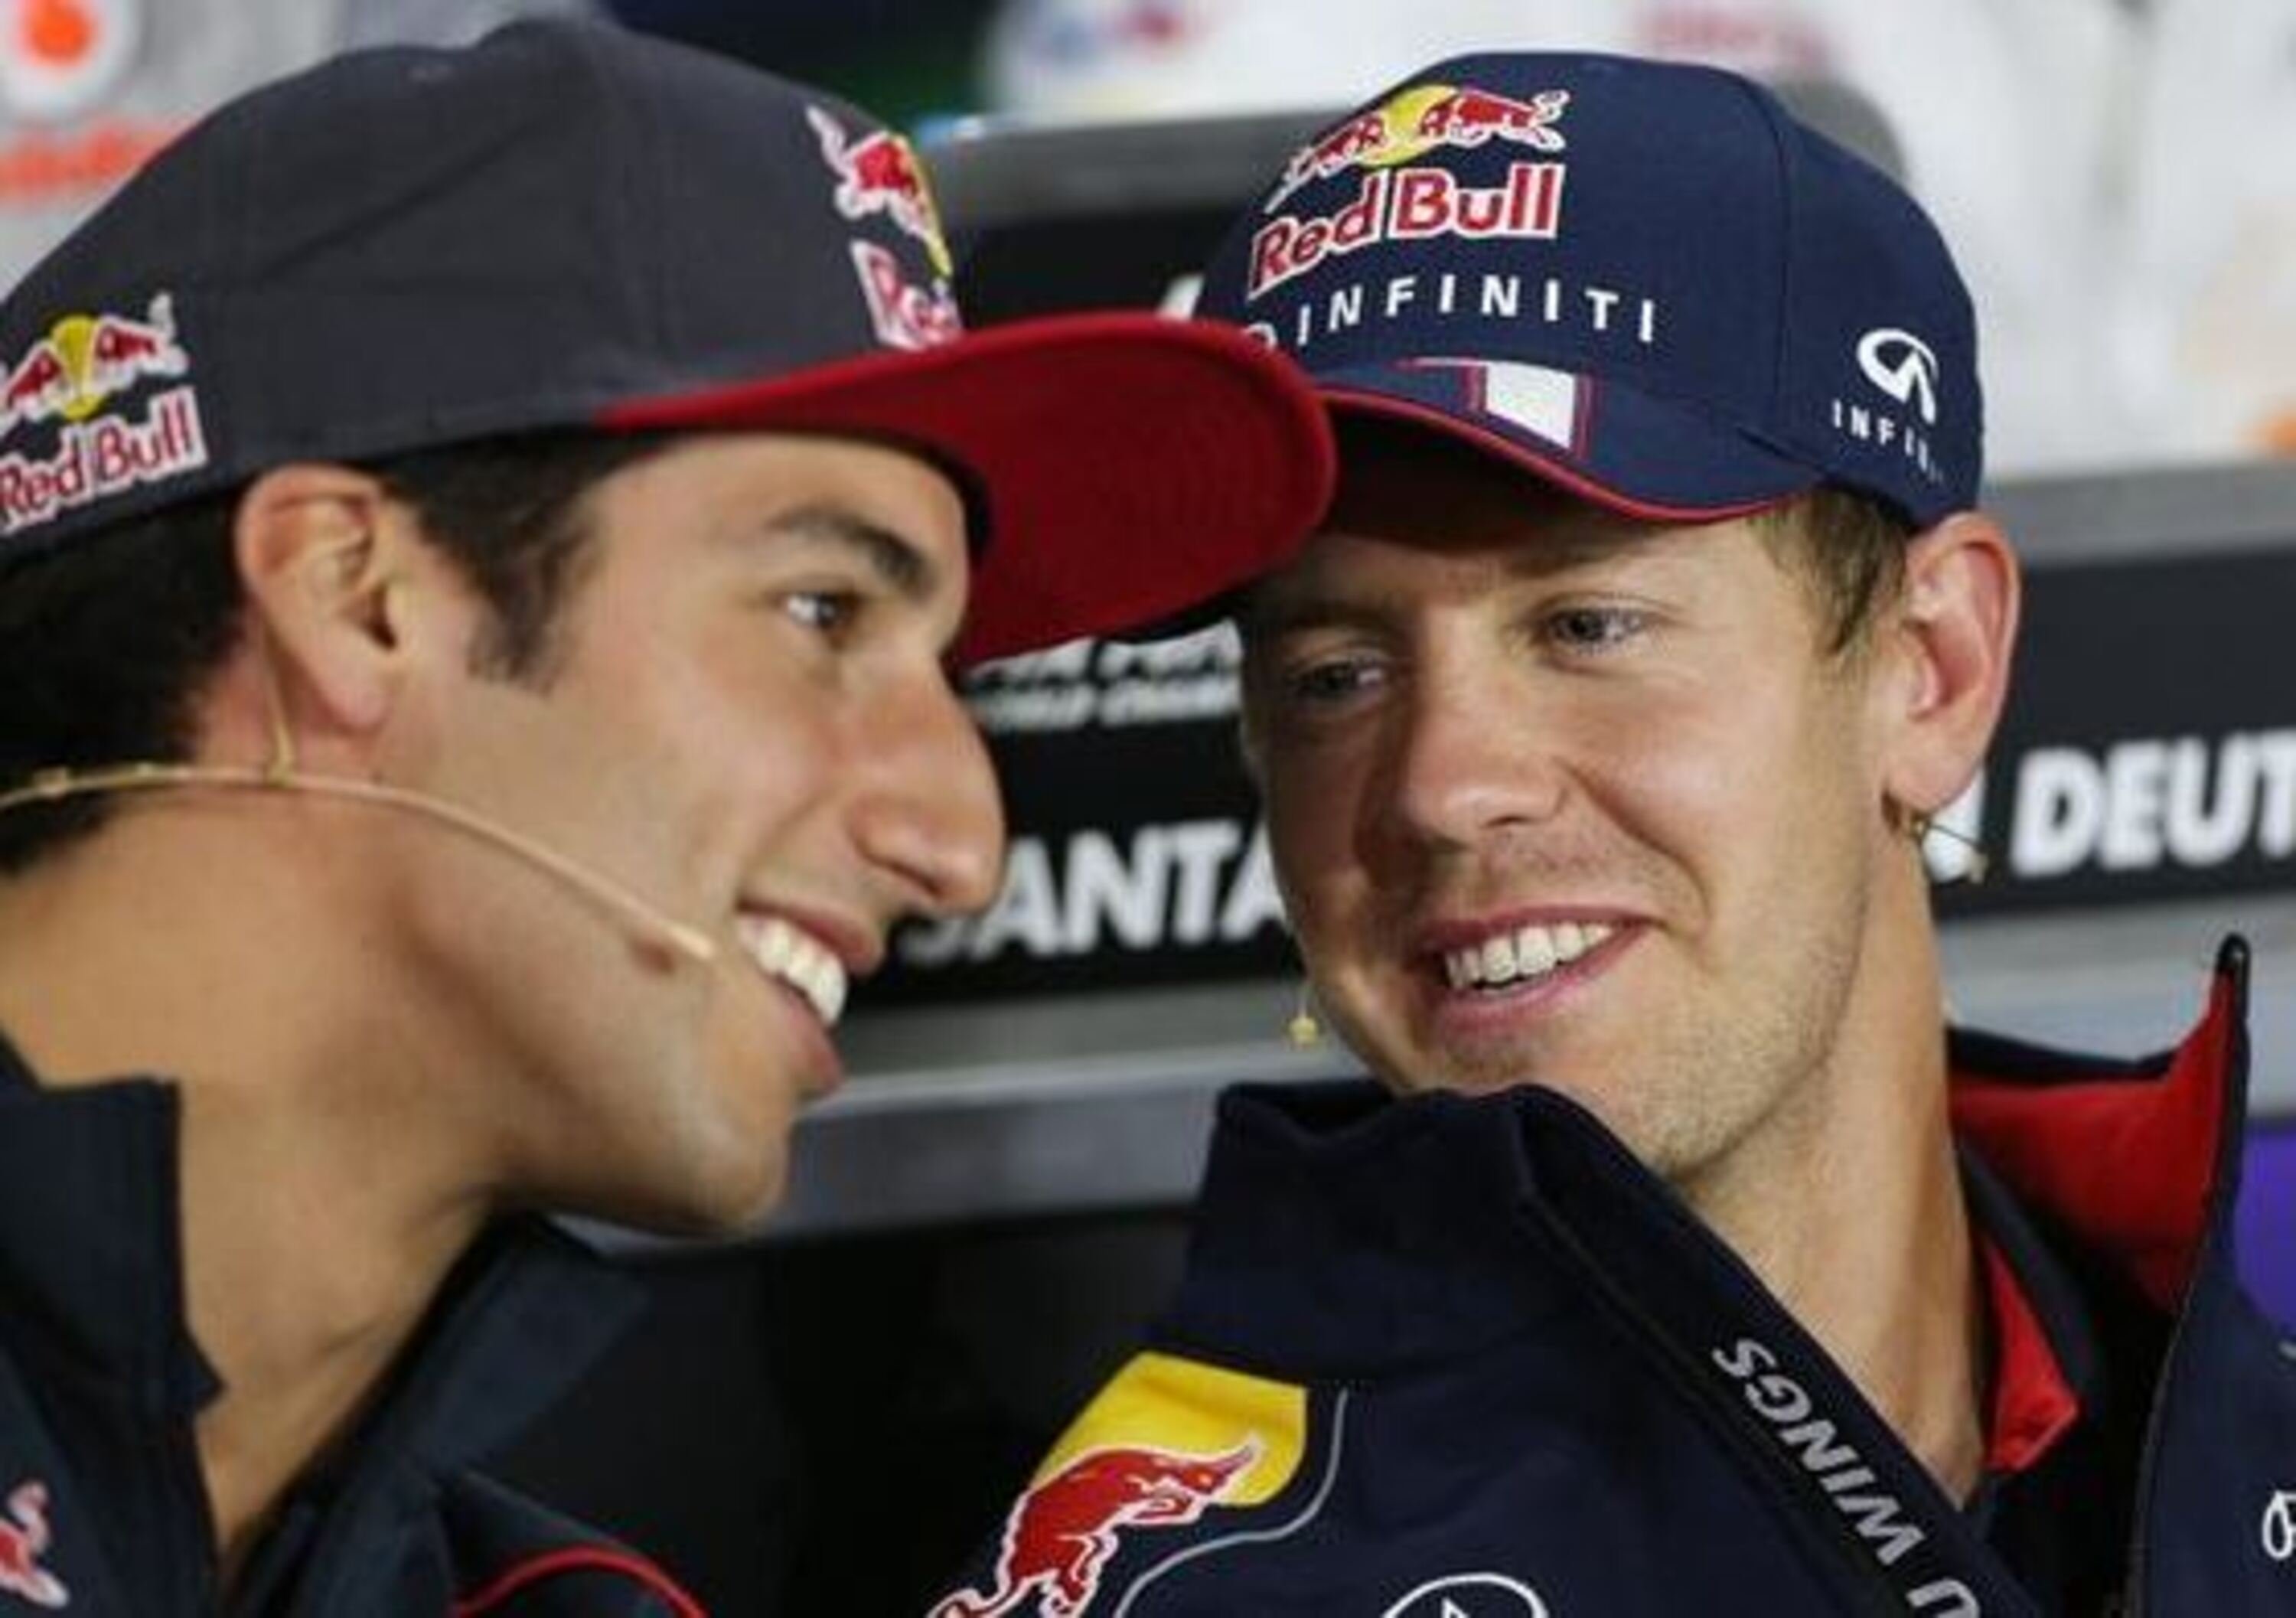 Daniel Ricciardo affiancher&agrave; Vettel in Red Bull dal 2014